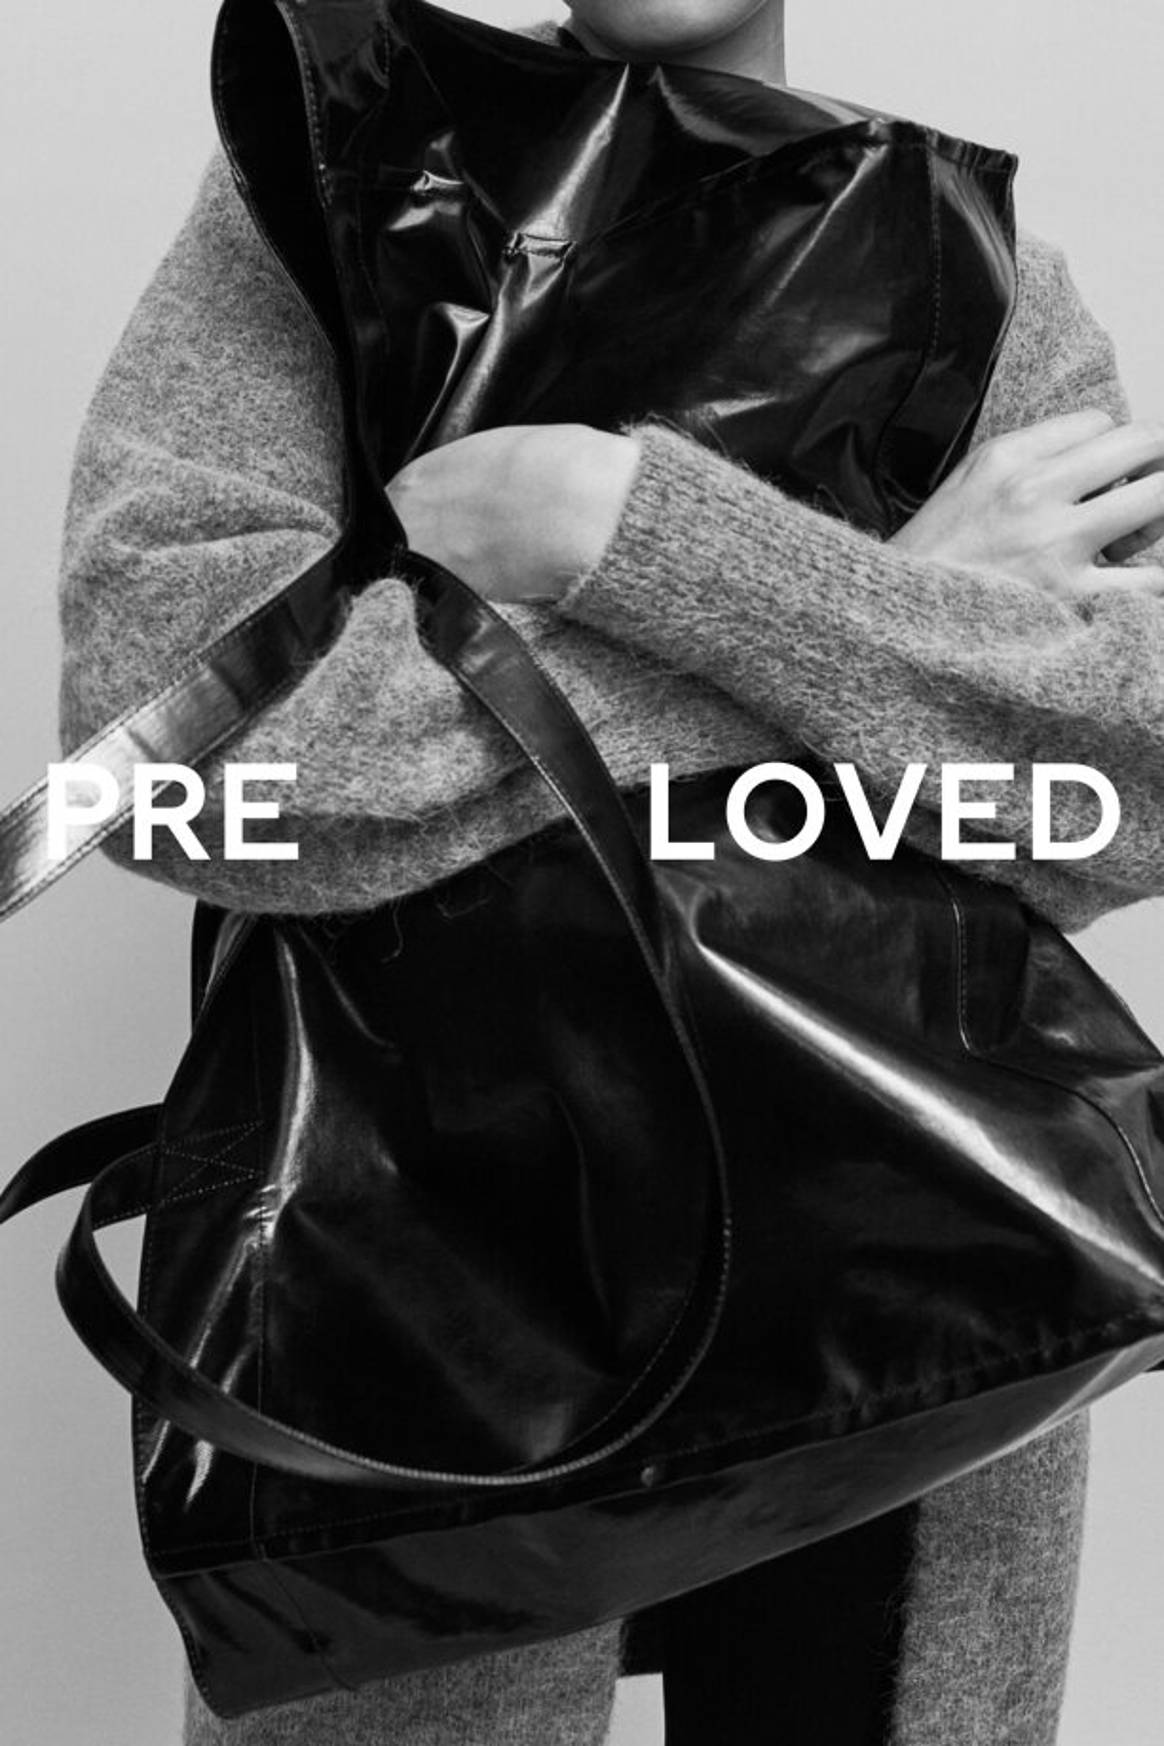 H&M ‘Pre-Loved’ concept